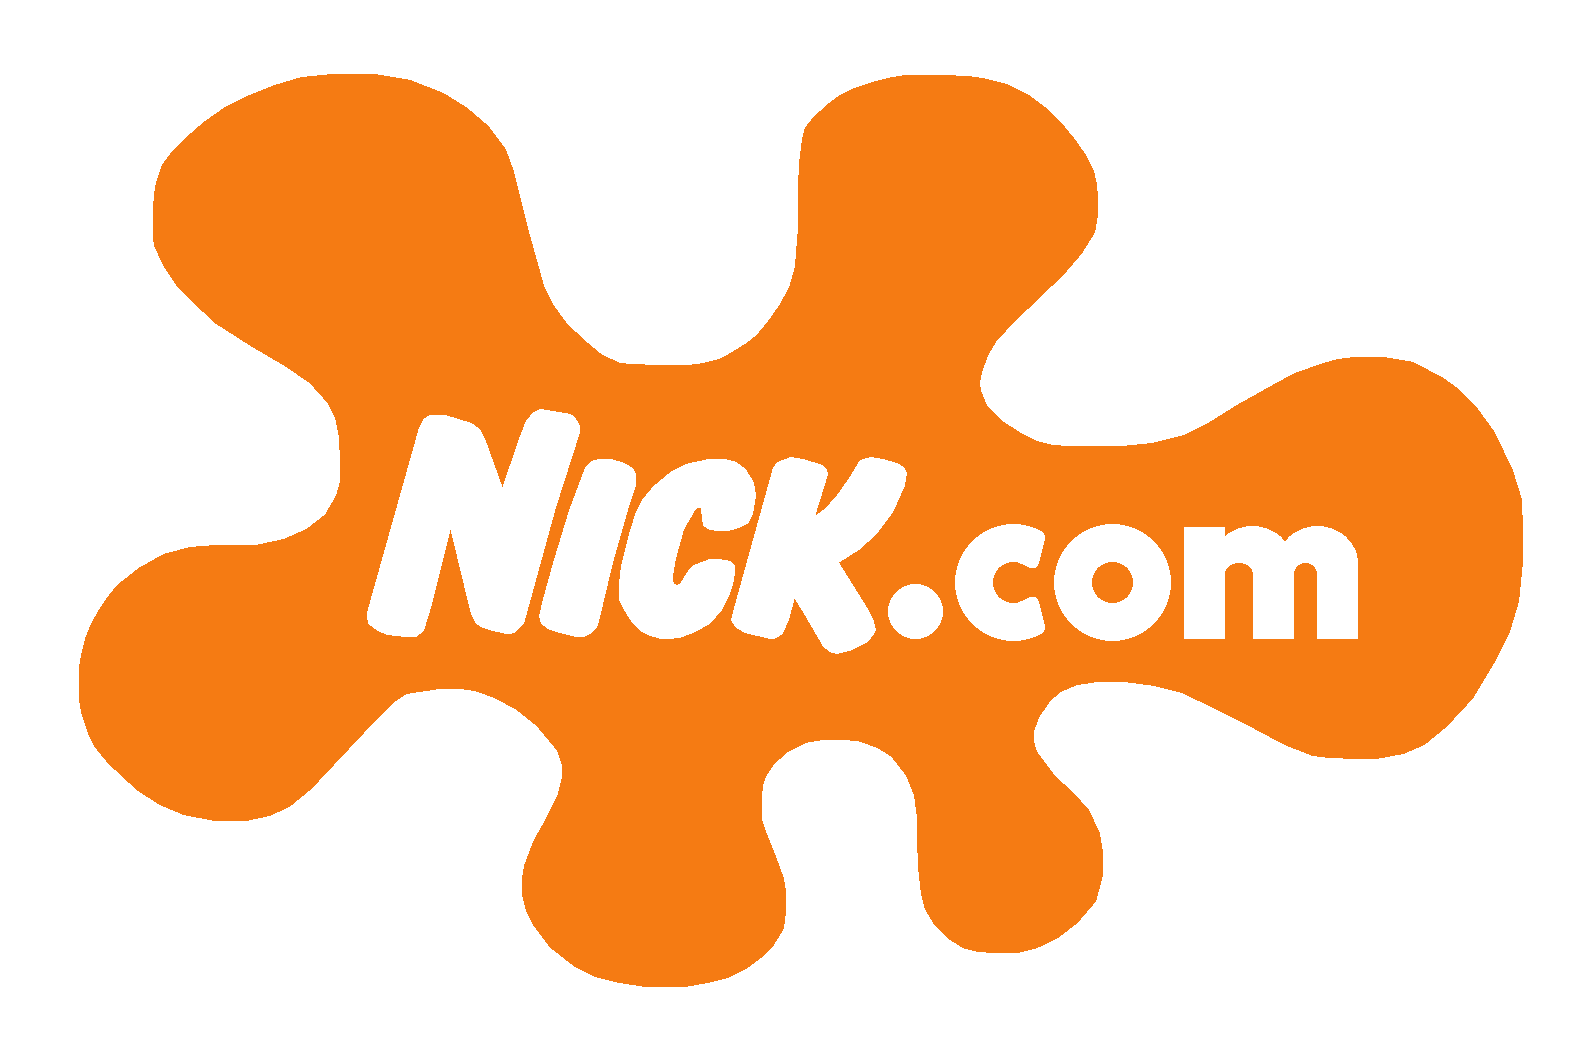 Text nick. Nickelodeon логотип. Nick. Com логотип. Nick 2004 logo.